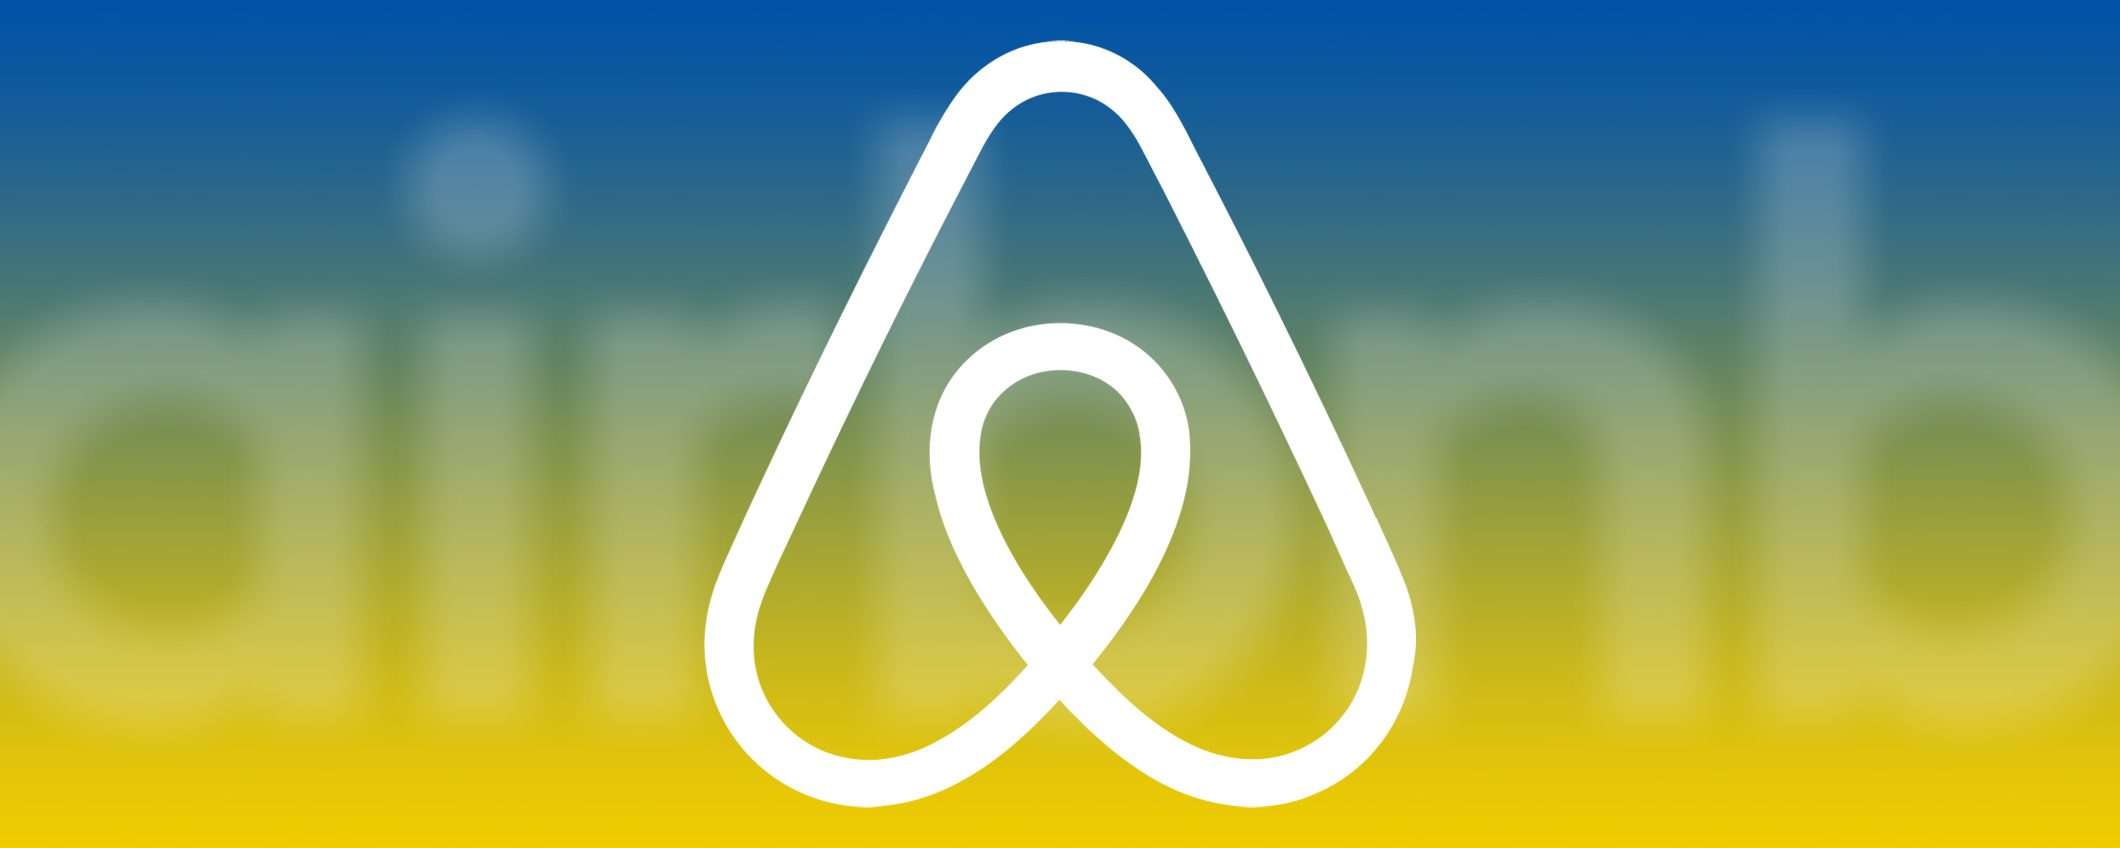 Airbnb: sequestrati 779 milioni per evasione fiscale